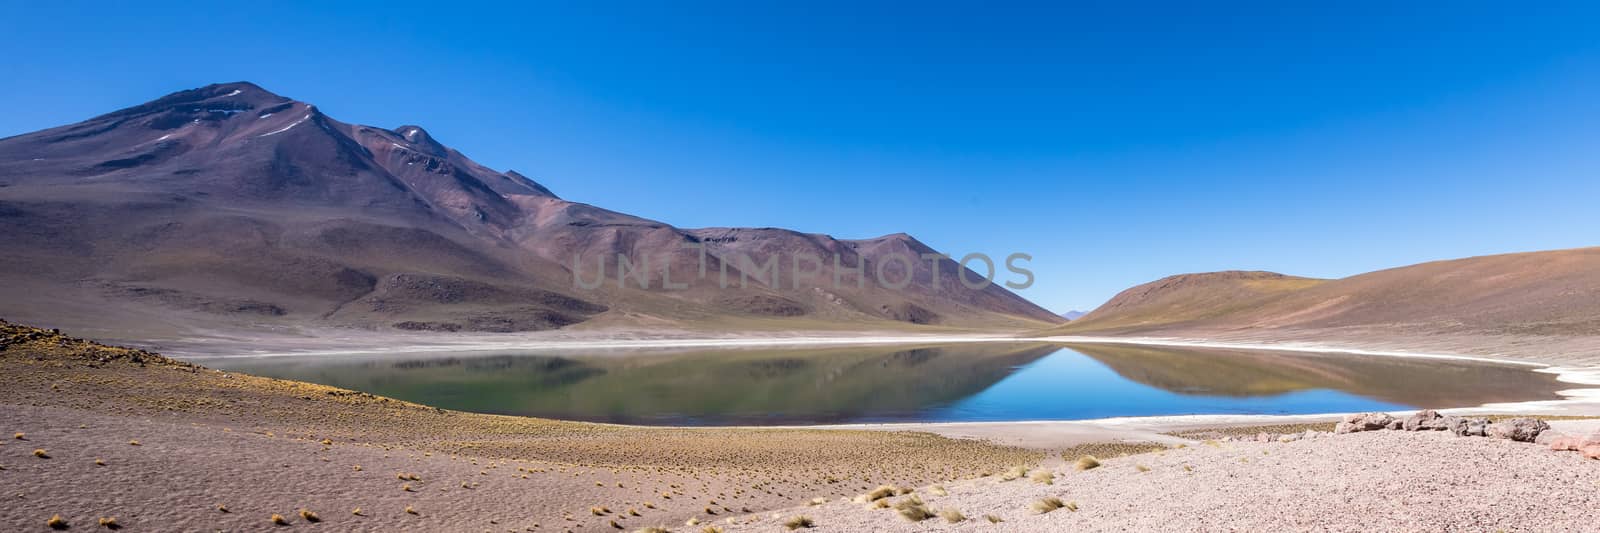 Lagunas Altiplanicas, Miscanti y Miniques, amazing view at Atacama Desert. Chile, South America. by SeuMelhorClick